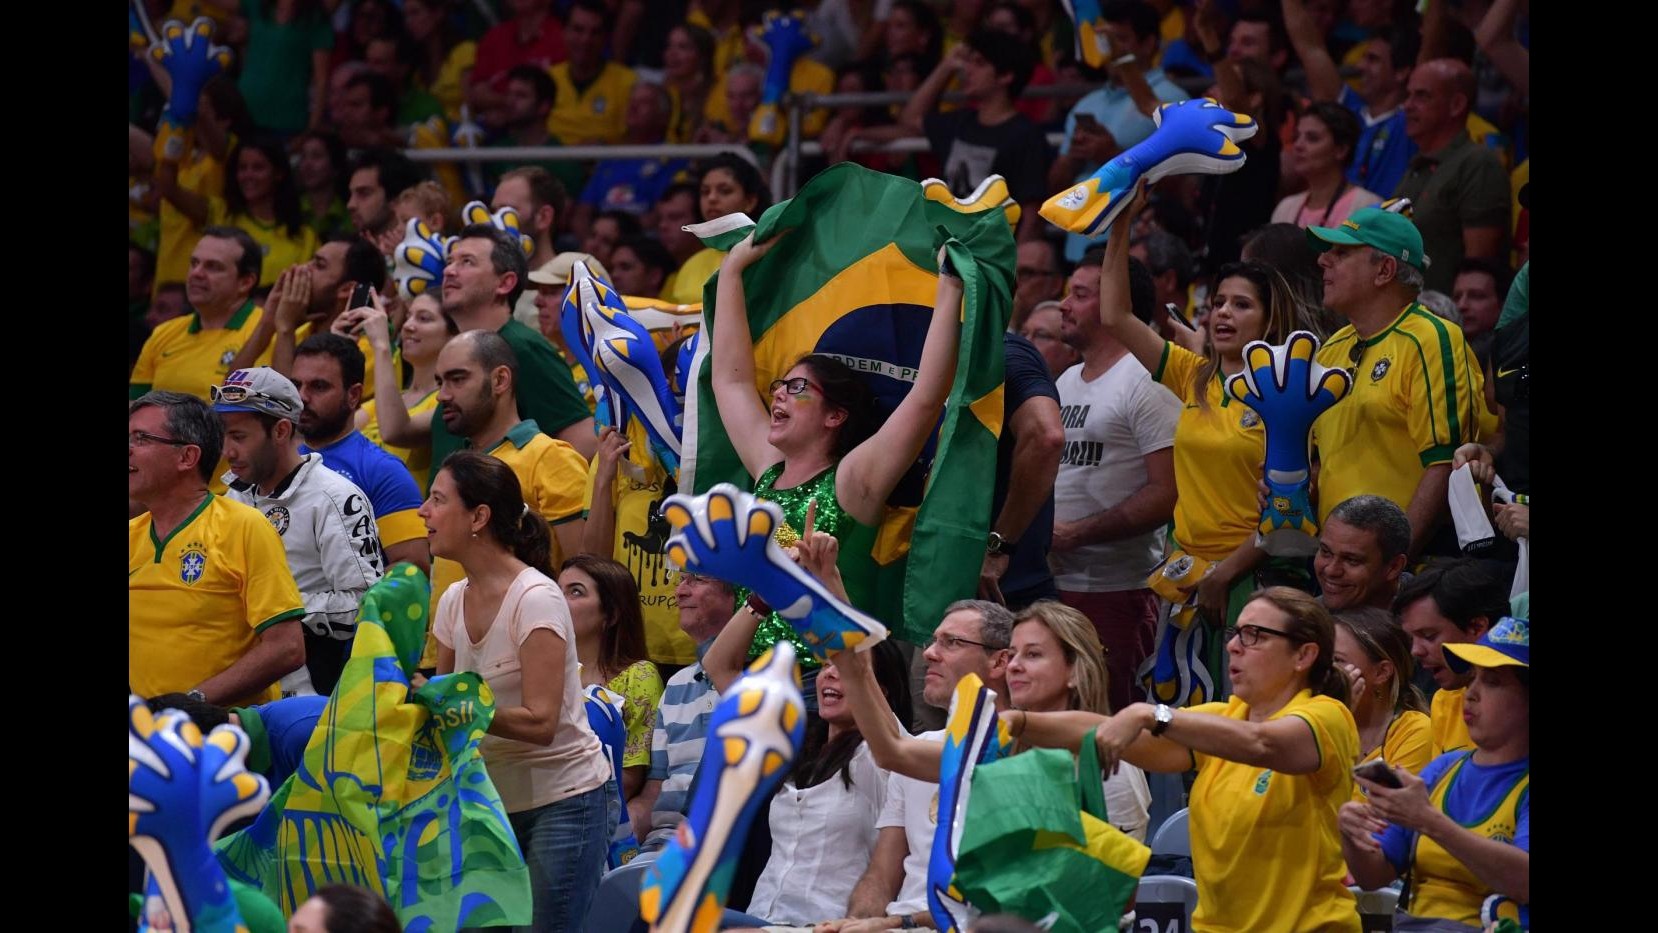 Rio, l’Italvolley si arrende al Brasile in finale: è argento